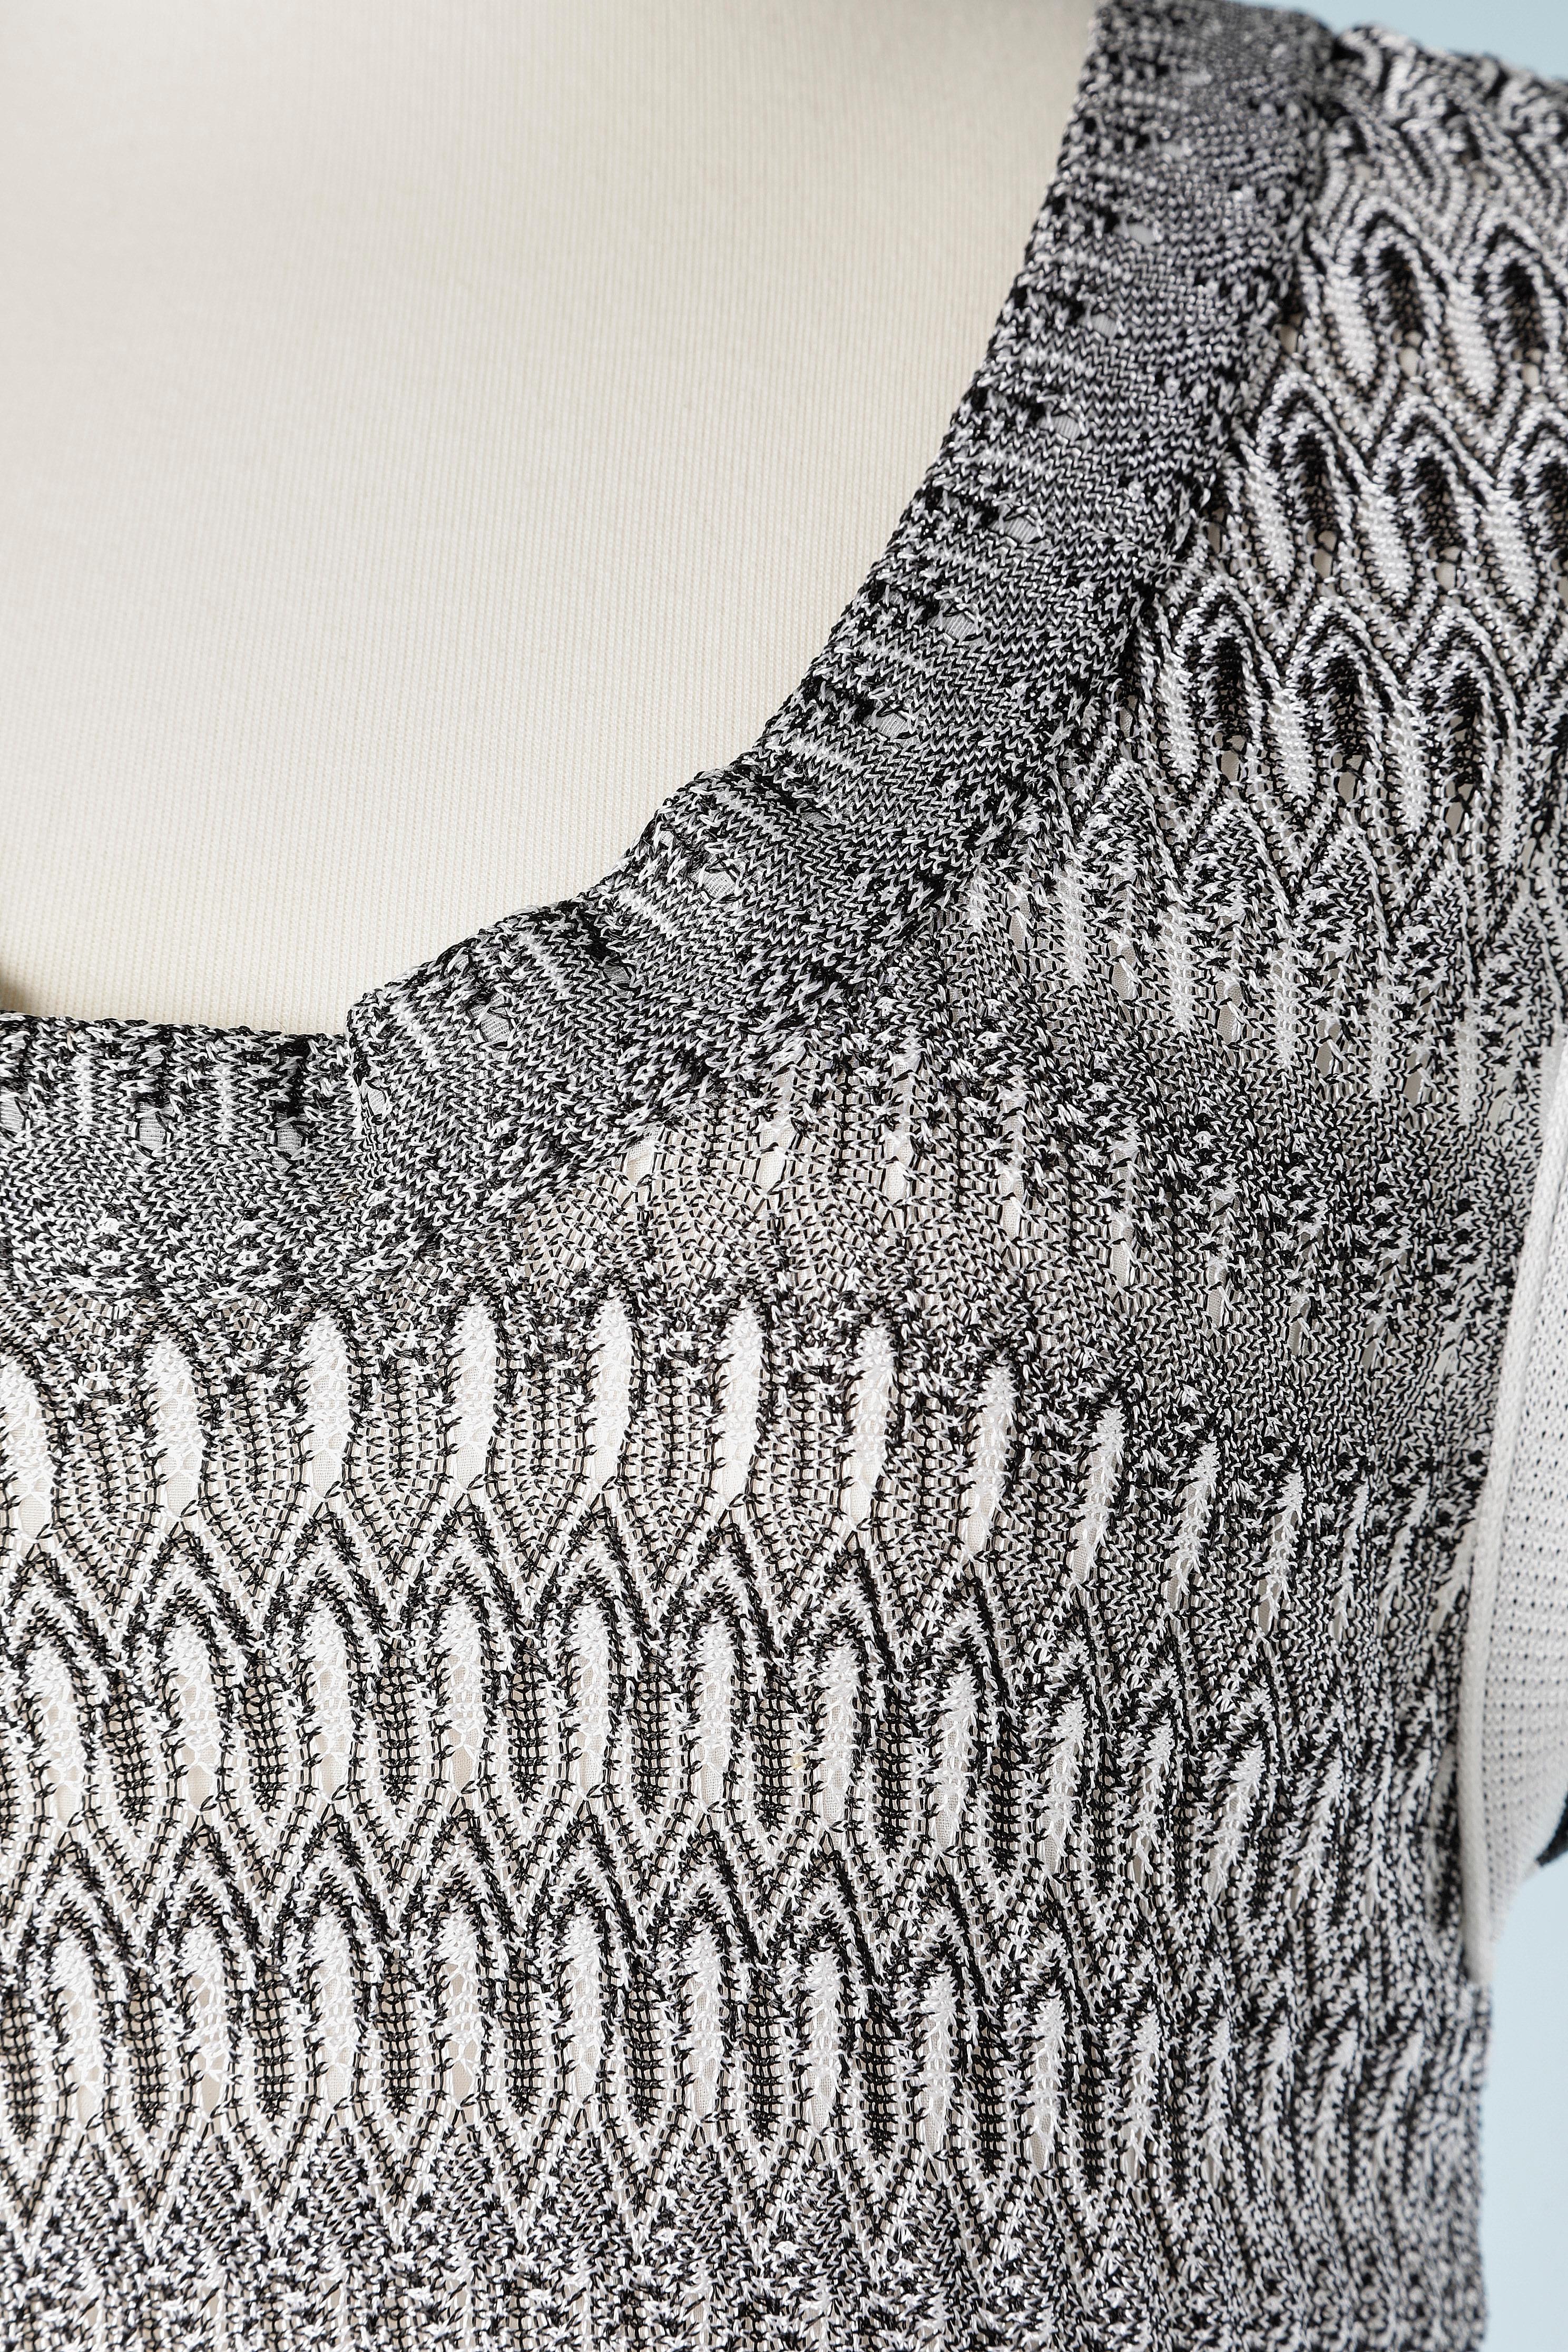 Black&white rayon jacquard knit sleeveless dress and cardigan ensemble Missoni  For Sale 3